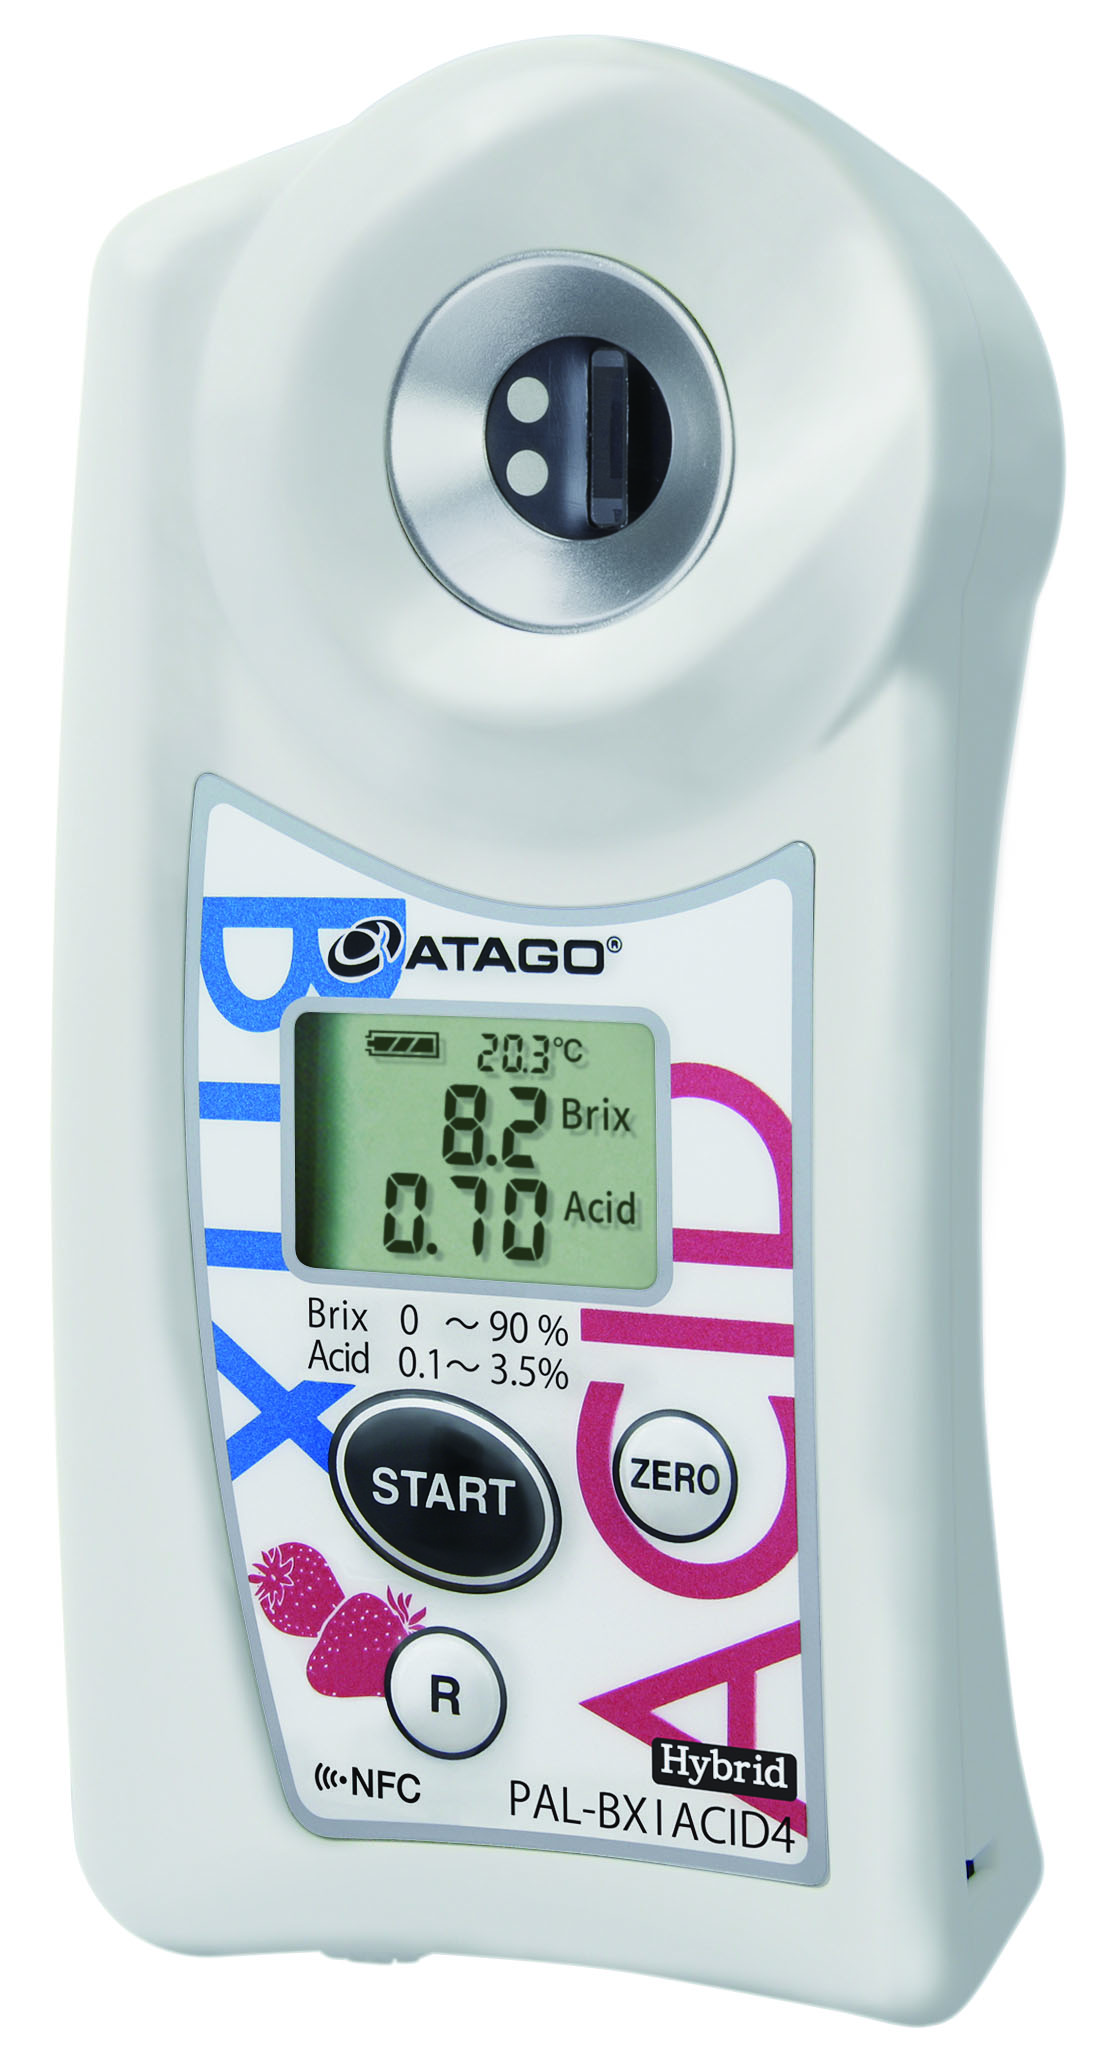 Atago 7104 Pocket Brix-Acidity Meter Strawberry PAL-BX|ACID4 Master Kit, Brix : 0.0 to 90.0％, Acid : 0.10 to 3.50％ Measurement Range